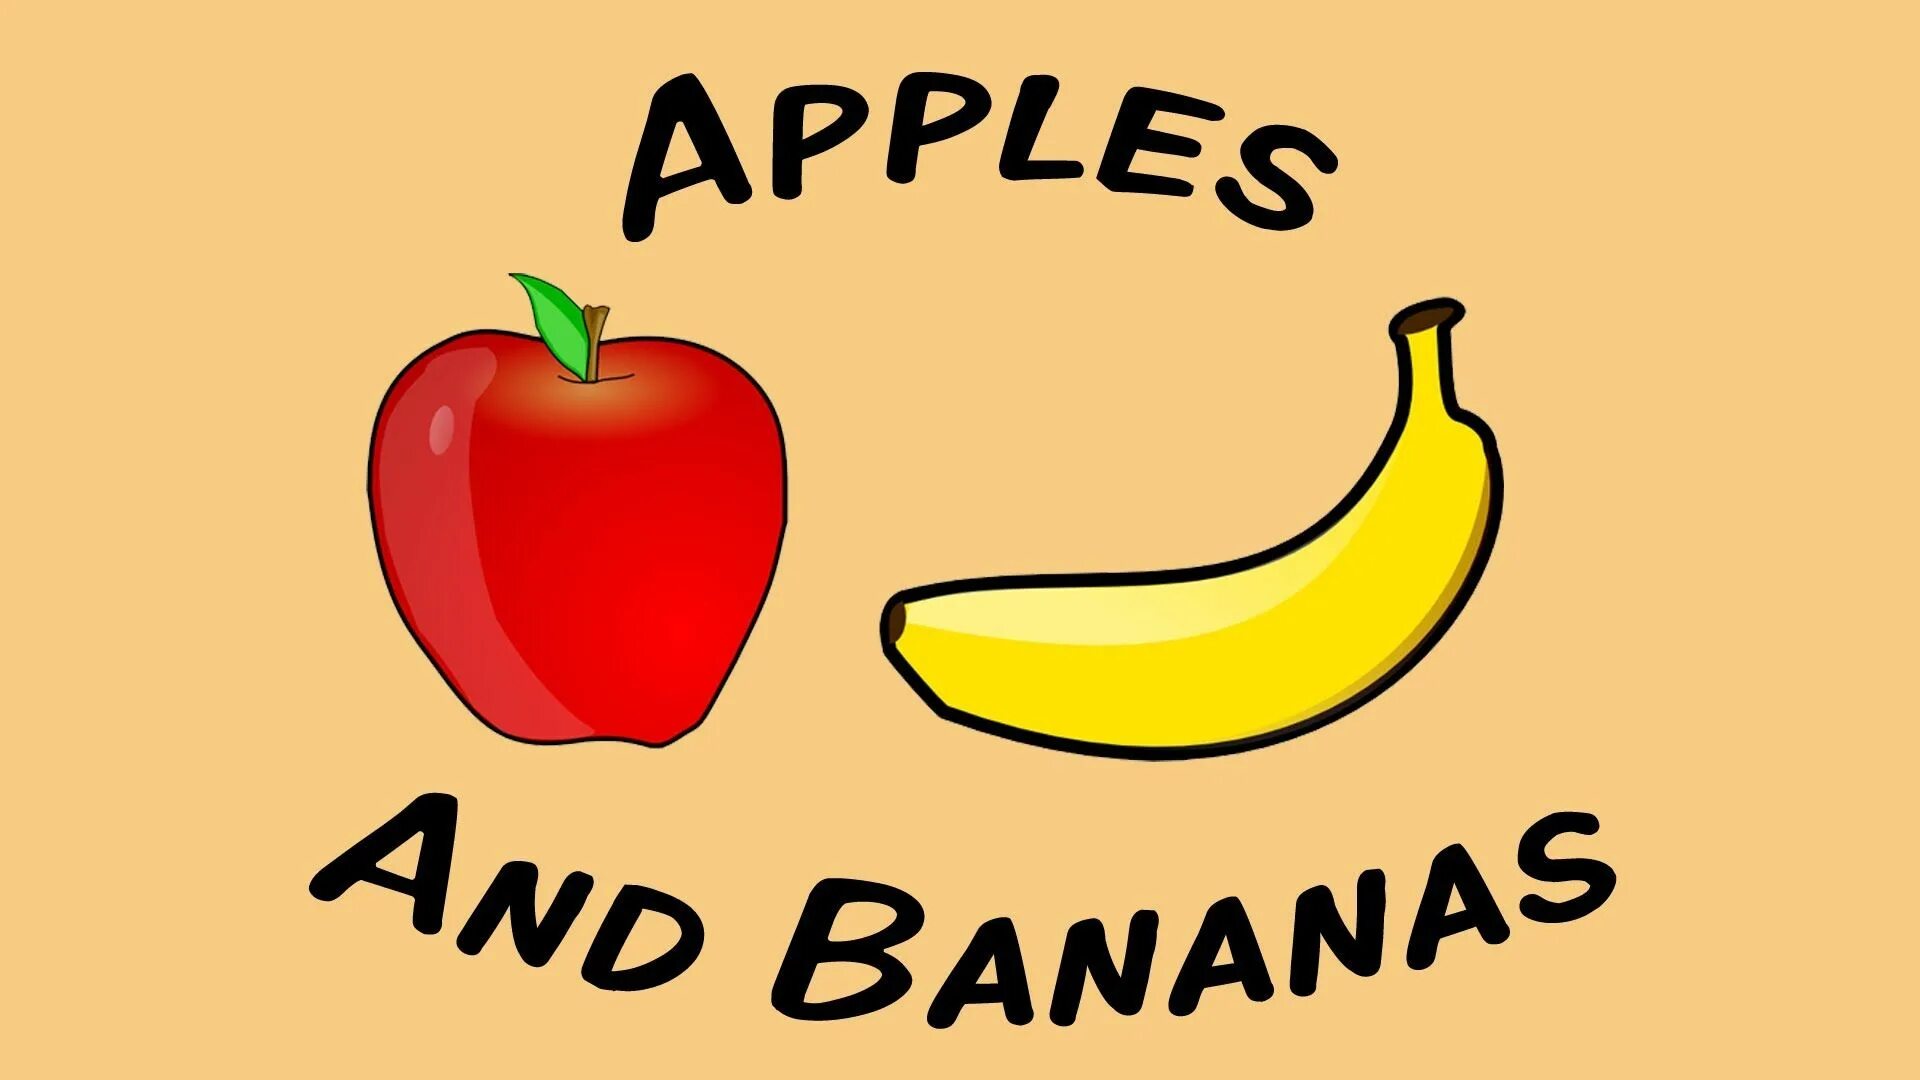 They like bananas. Яблоки и бананы. Банан рисунок. Рисунок яблок и бананов. Банан по английскому.